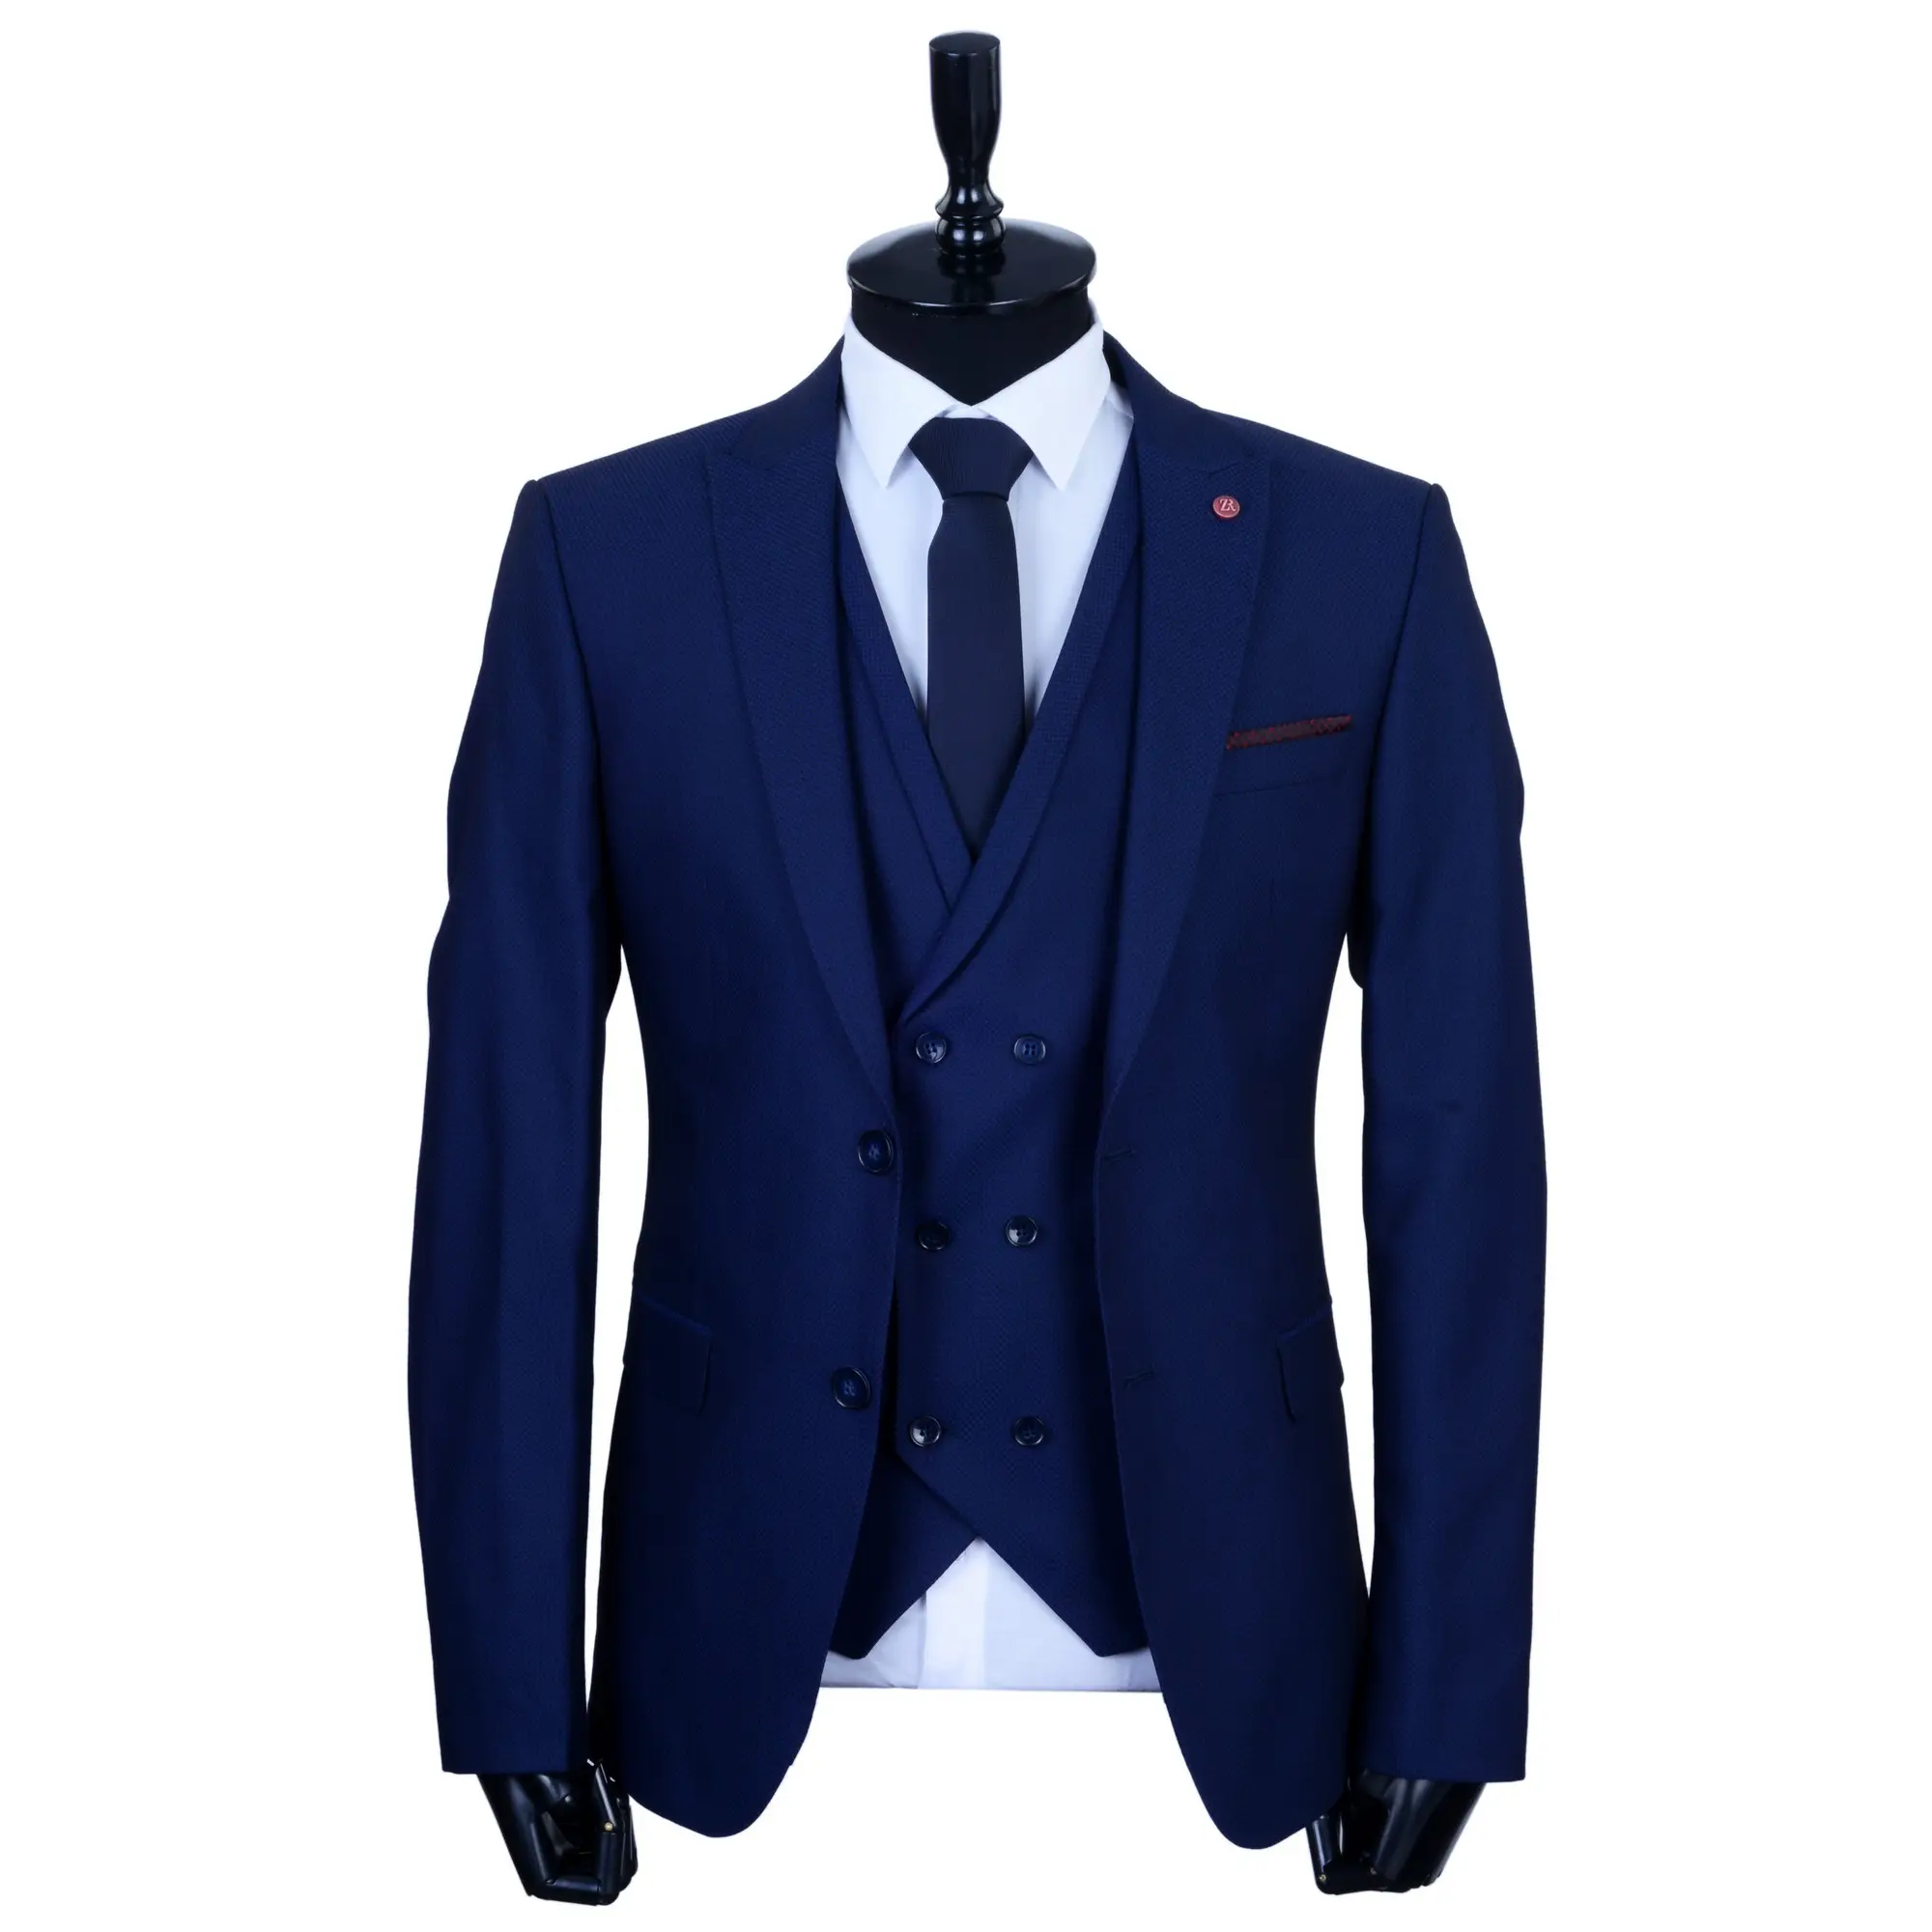 Whosale Men's Suits Slim Fit Luxury Male Wedding Groom's & Business Suit For Men